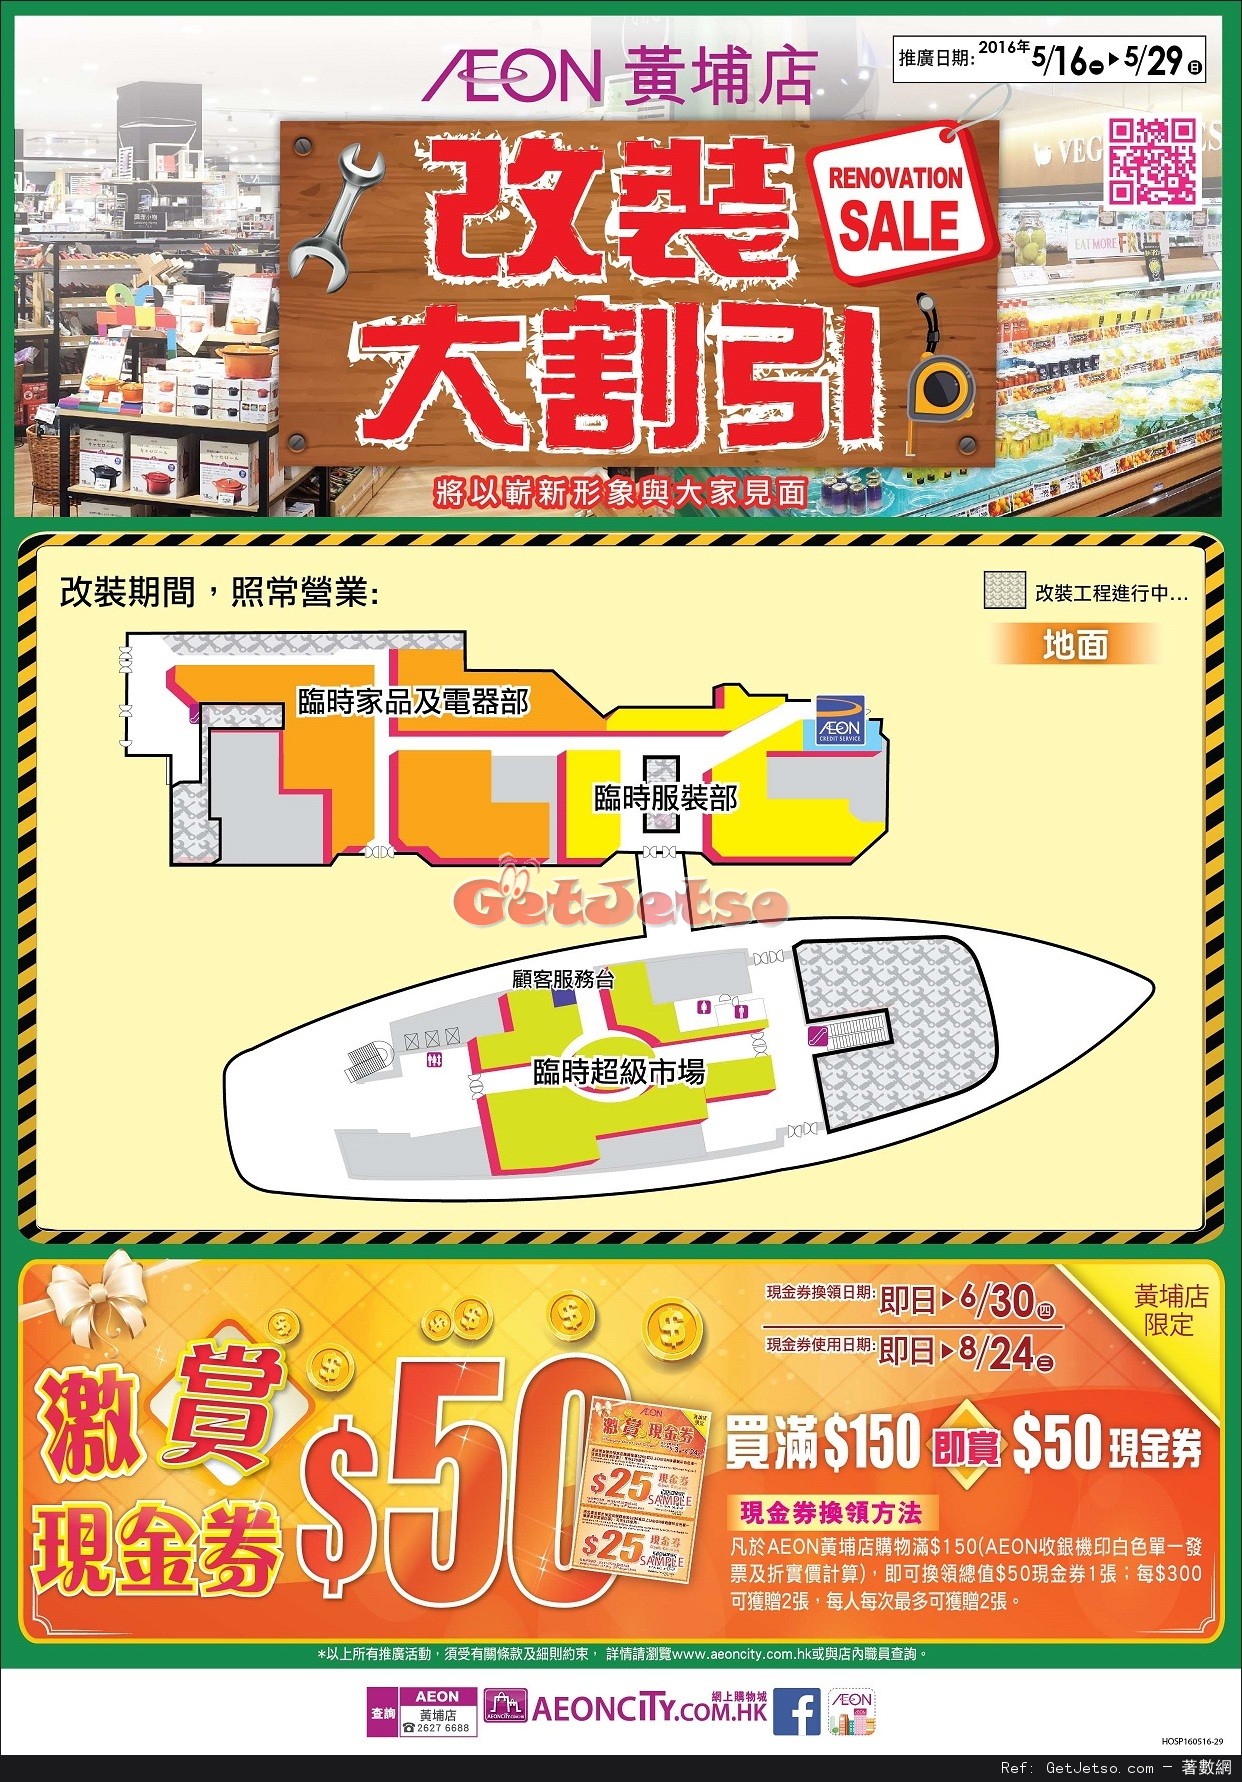 AEON 黃埔店限定-改裝大割引購物優惠(至16年5月29日)圖片1